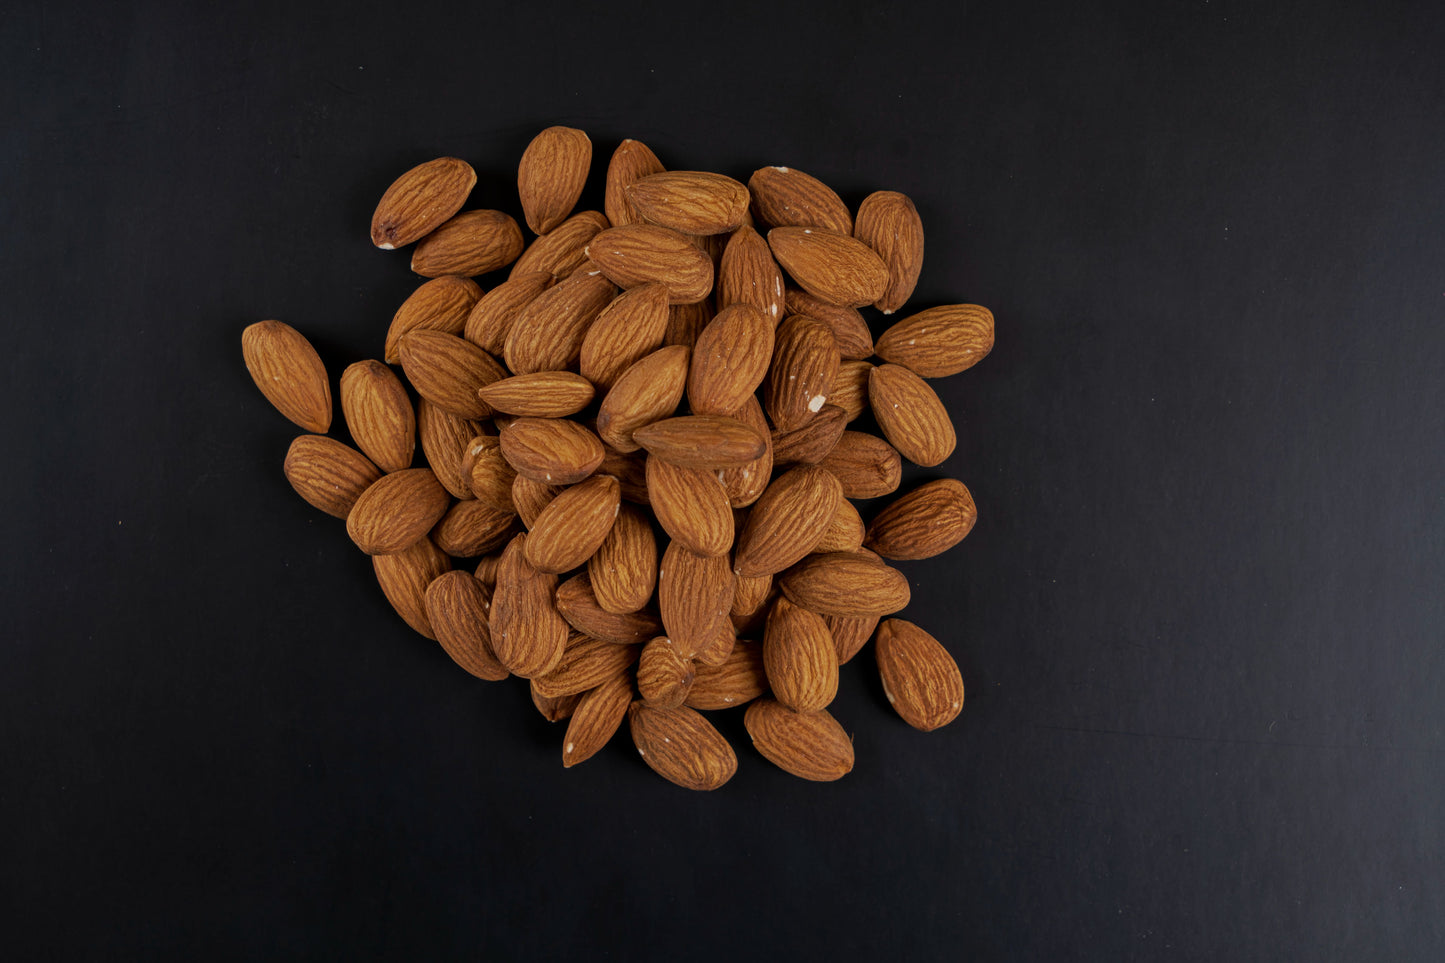 Raw Almonds | لوز نيئ